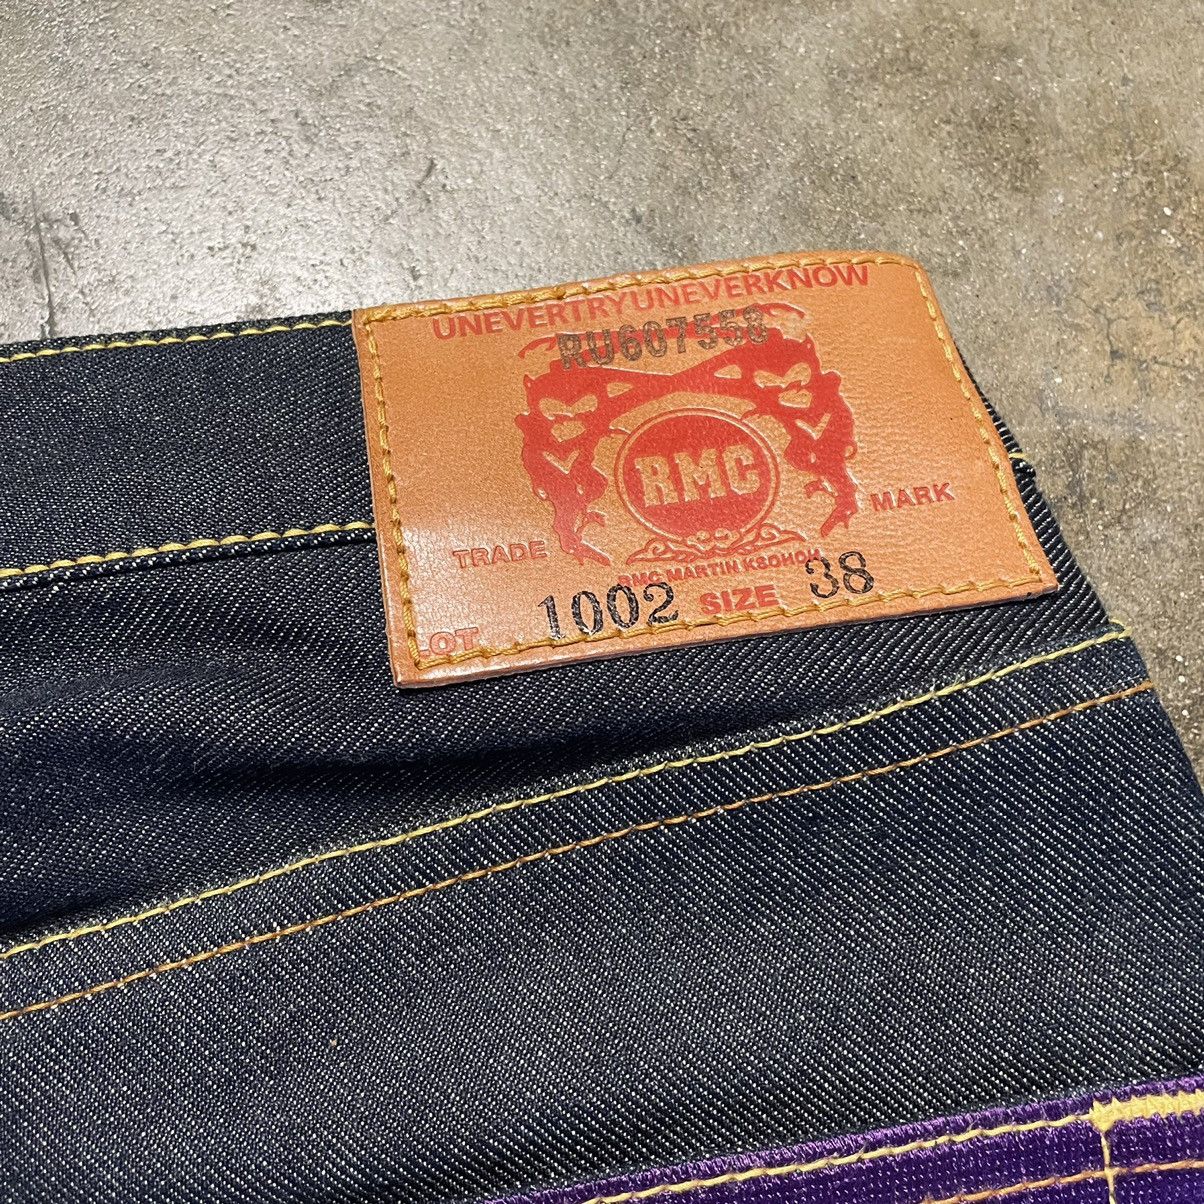 Vintage Red Monkey Company RMC Selvedge Denim Jeans Size US 38 / EU 54 - 4 Thumbnail